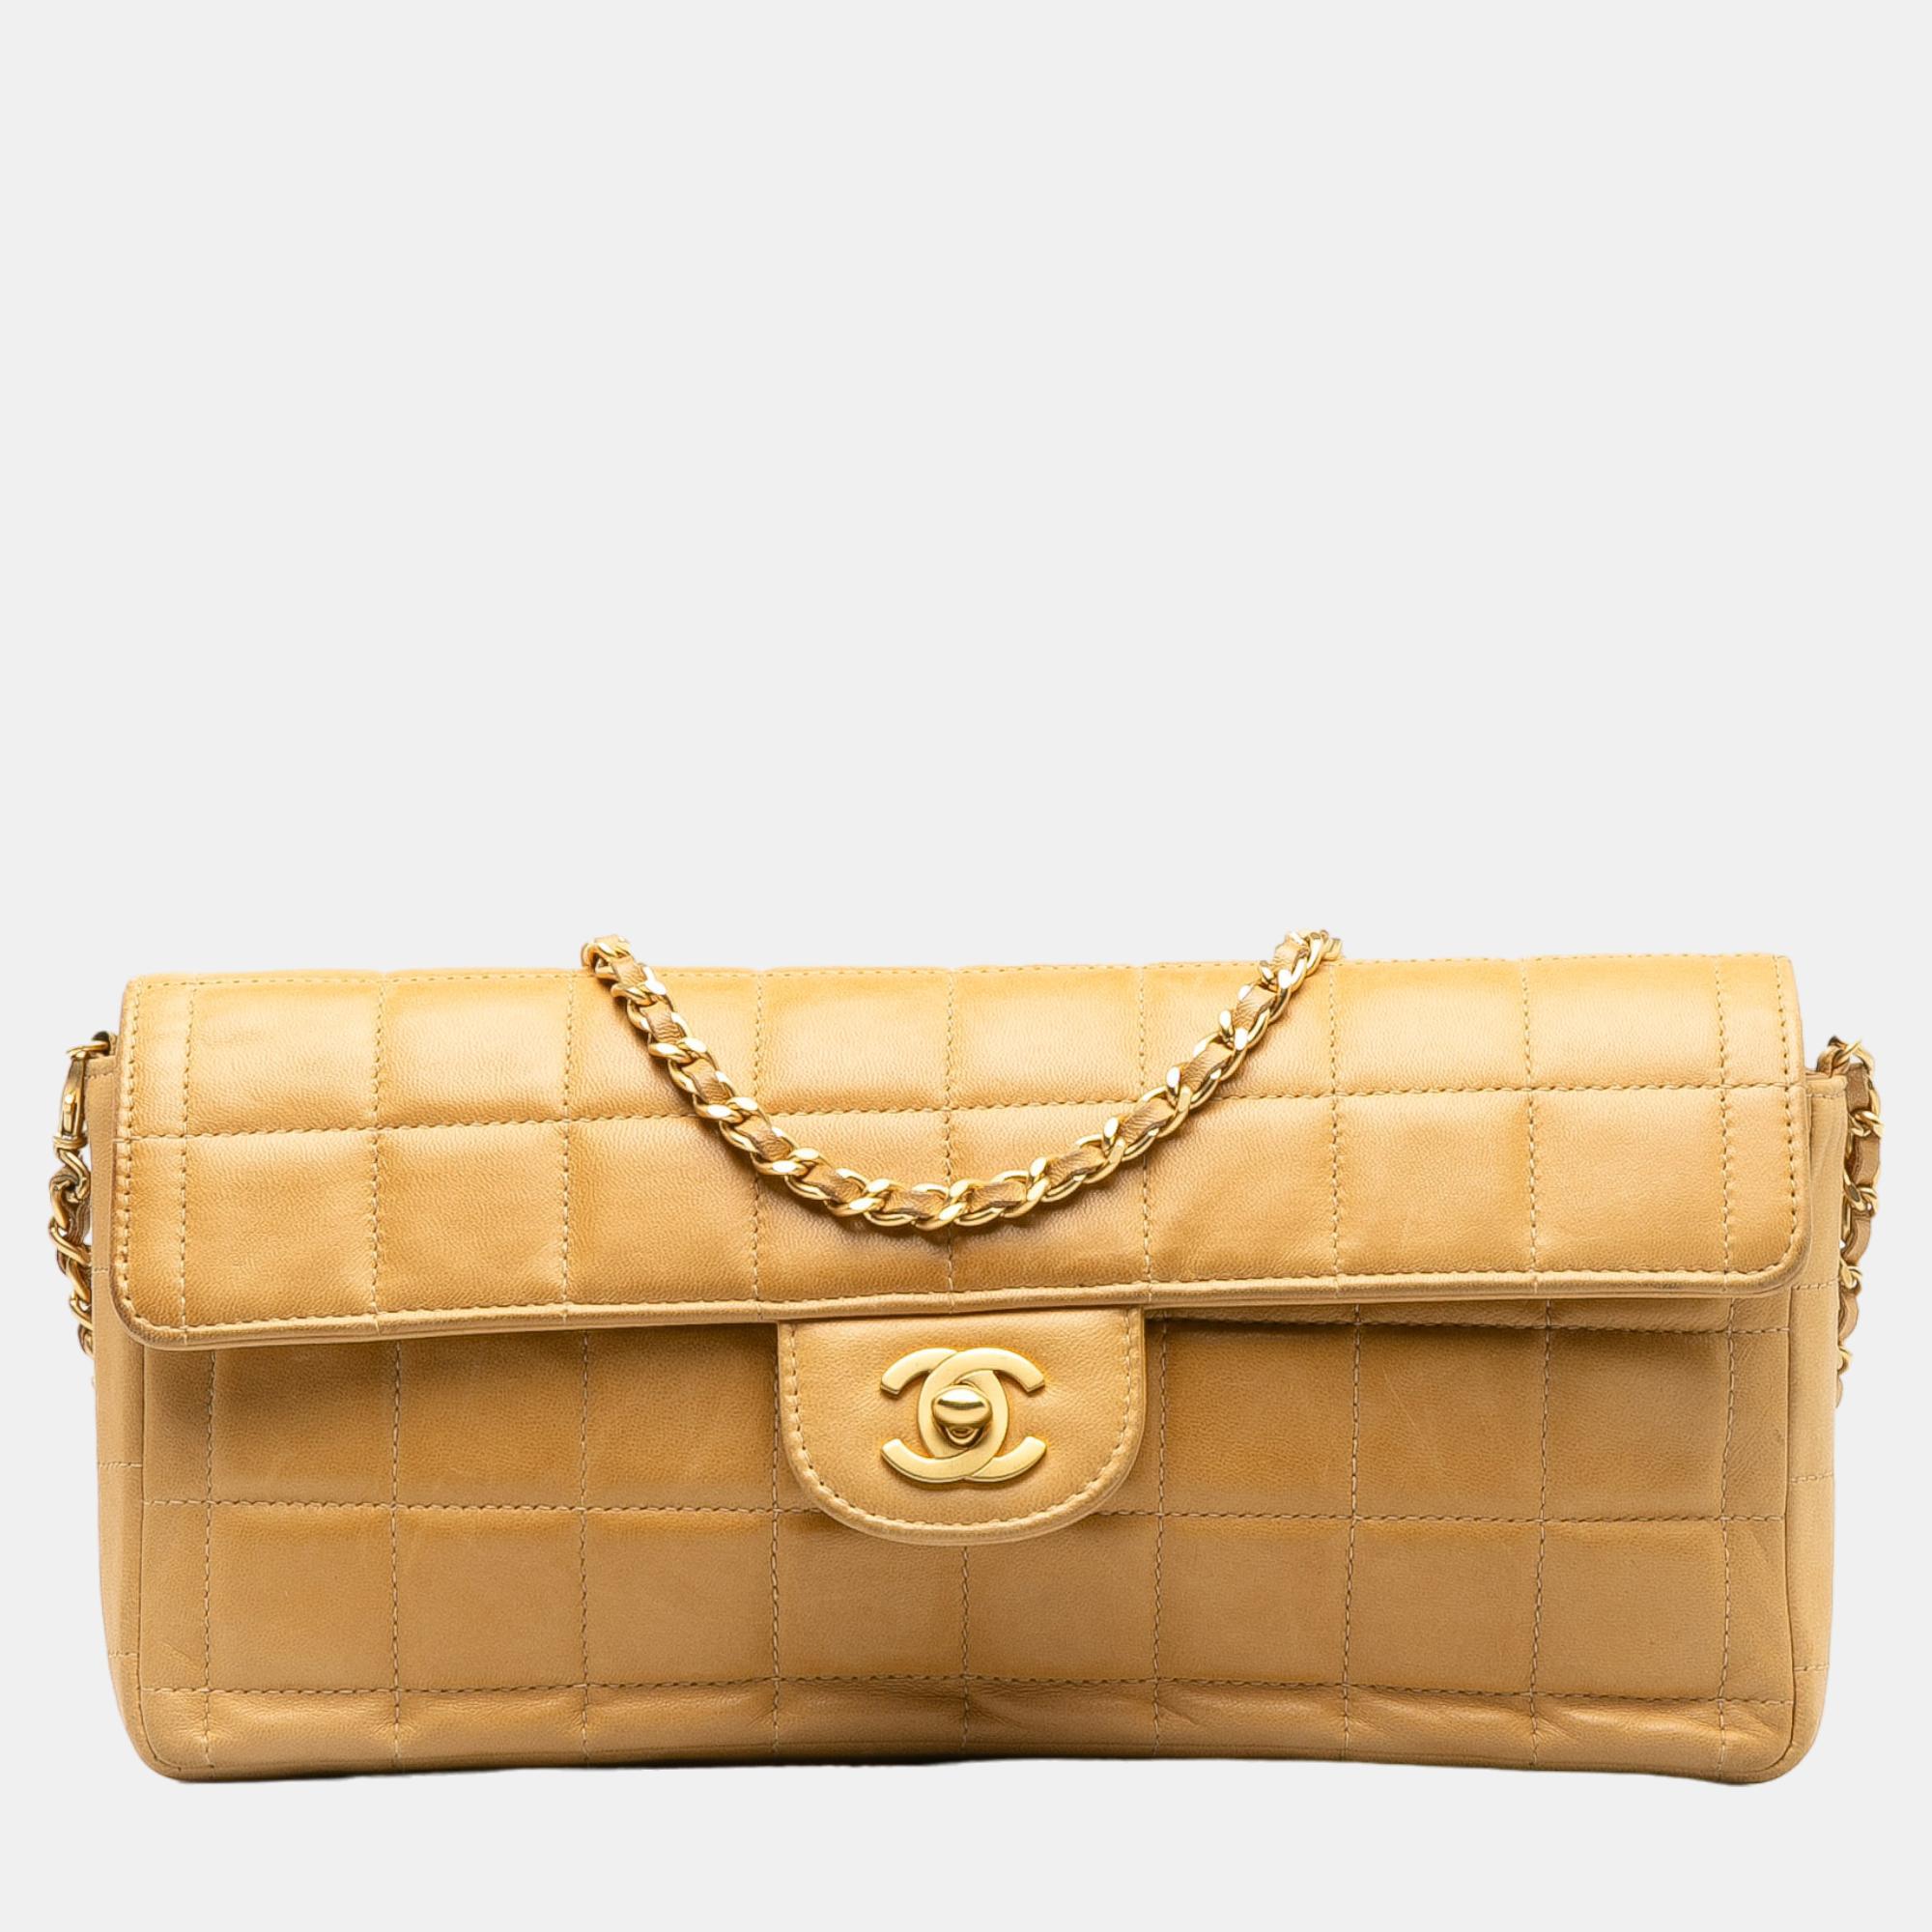 Chanel beige/brown choco bar east west flap bag